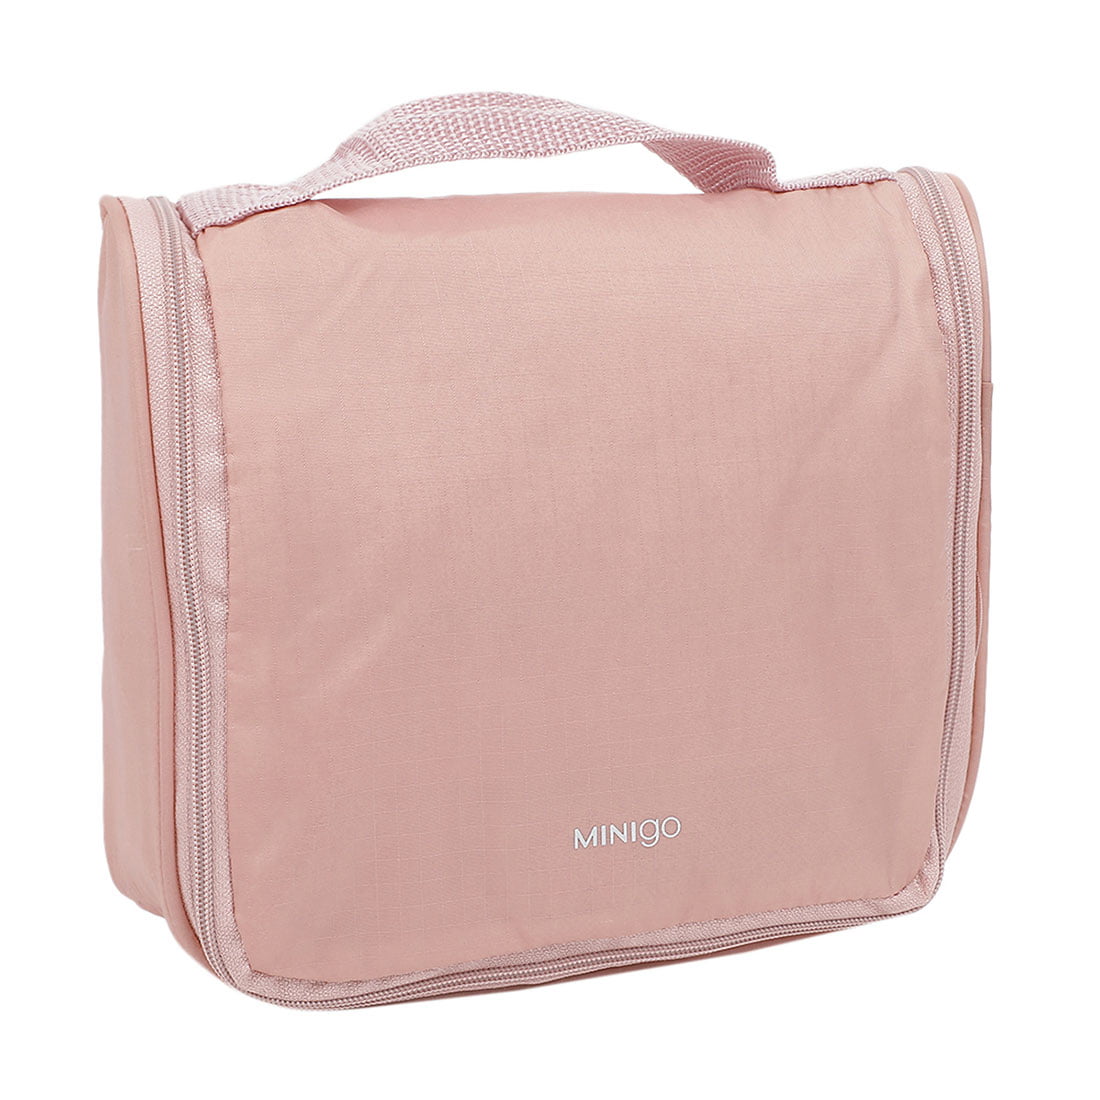 Buy MINISO Minigo Foldable Backpack (Pink) Online - Best Price MINISO  Minigo Foldable Backpack (Pink) - Justdial Shop Online.